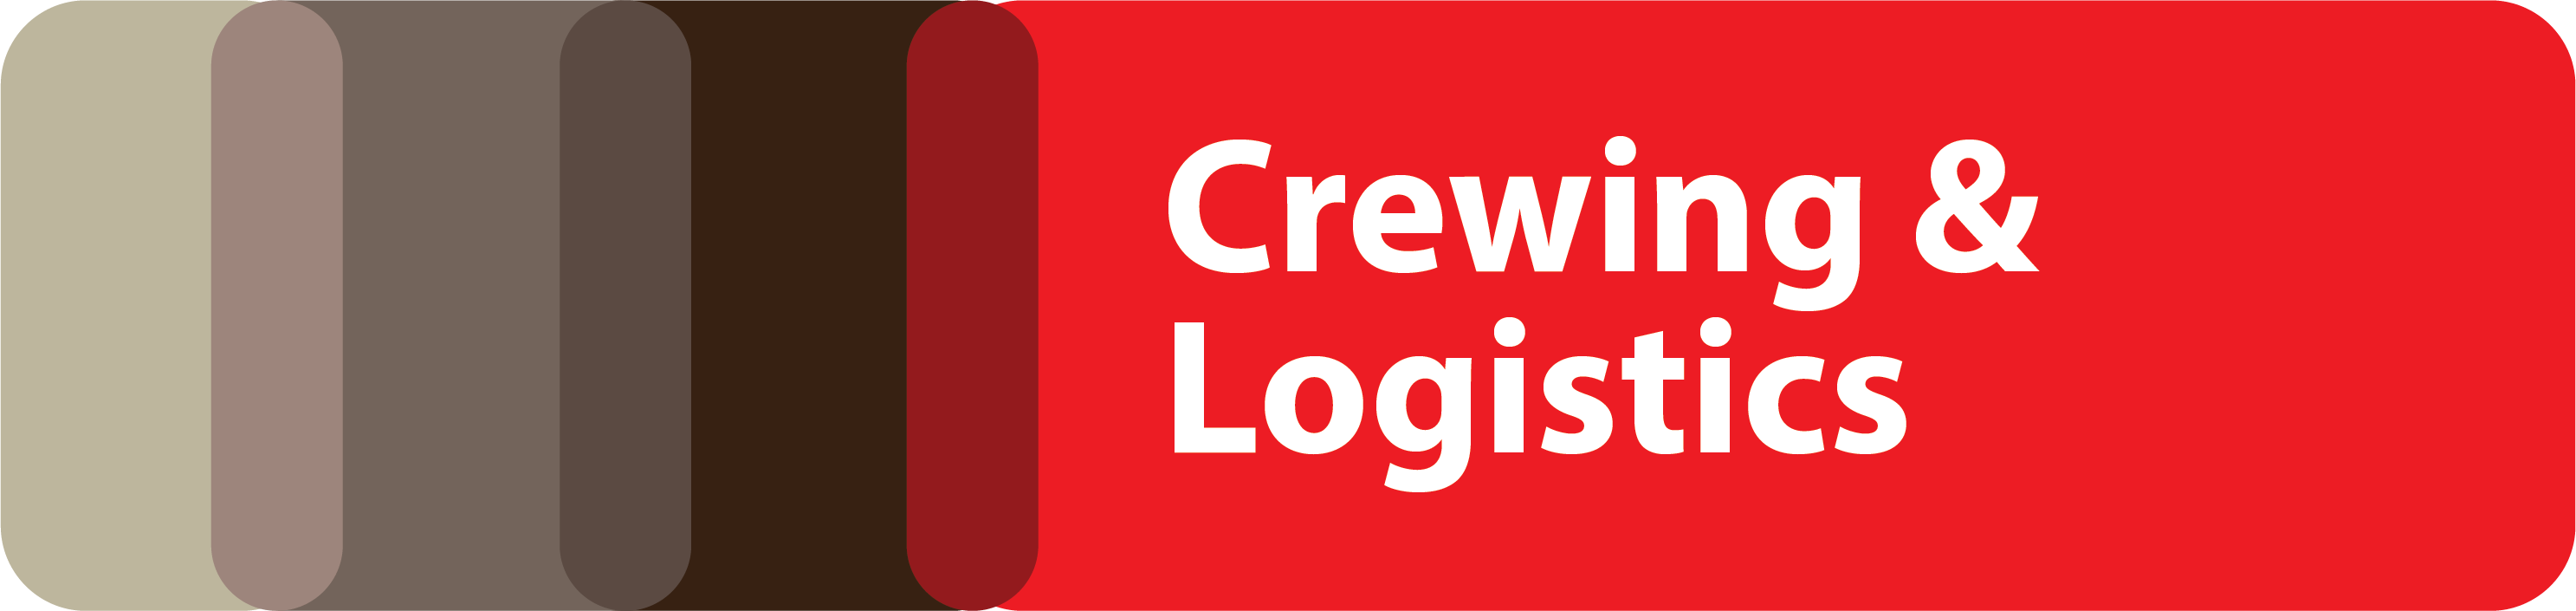 Crewing & Logistics